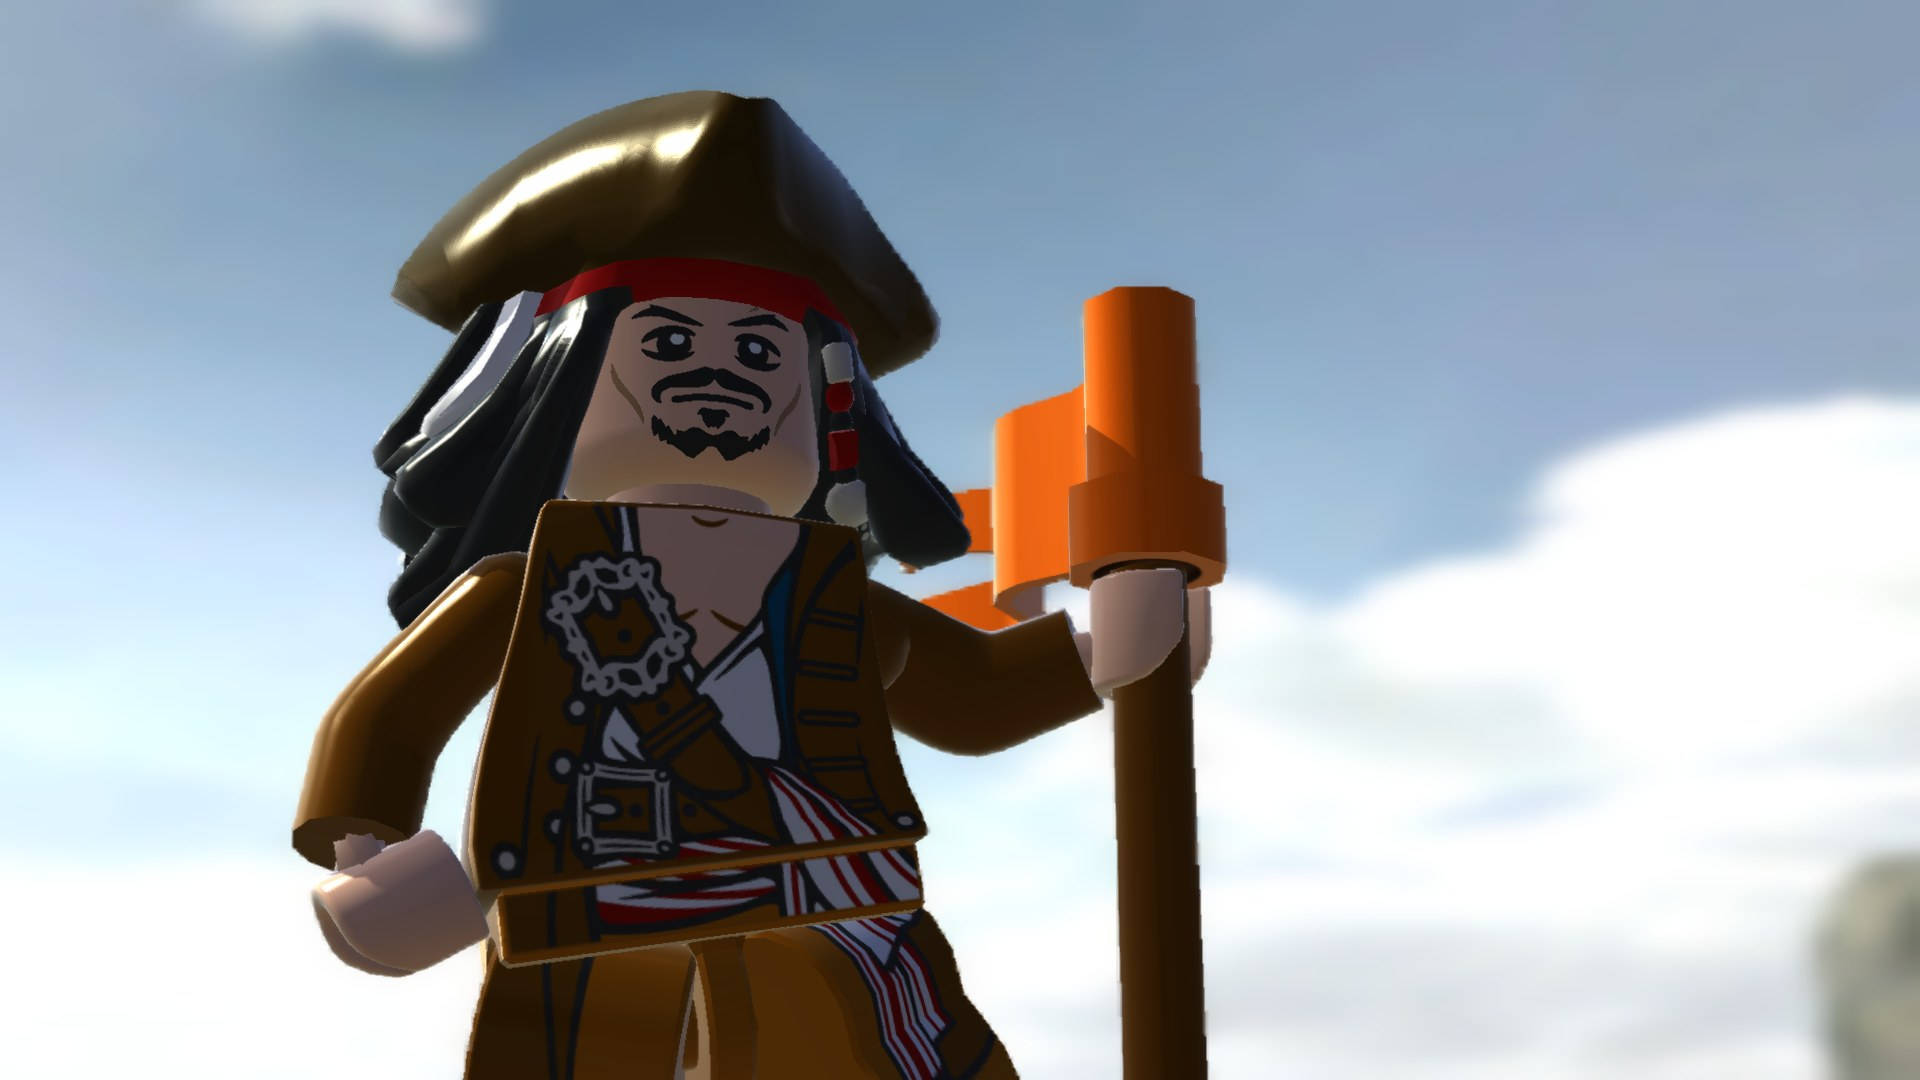 Jack Sparrow Lego Video Game